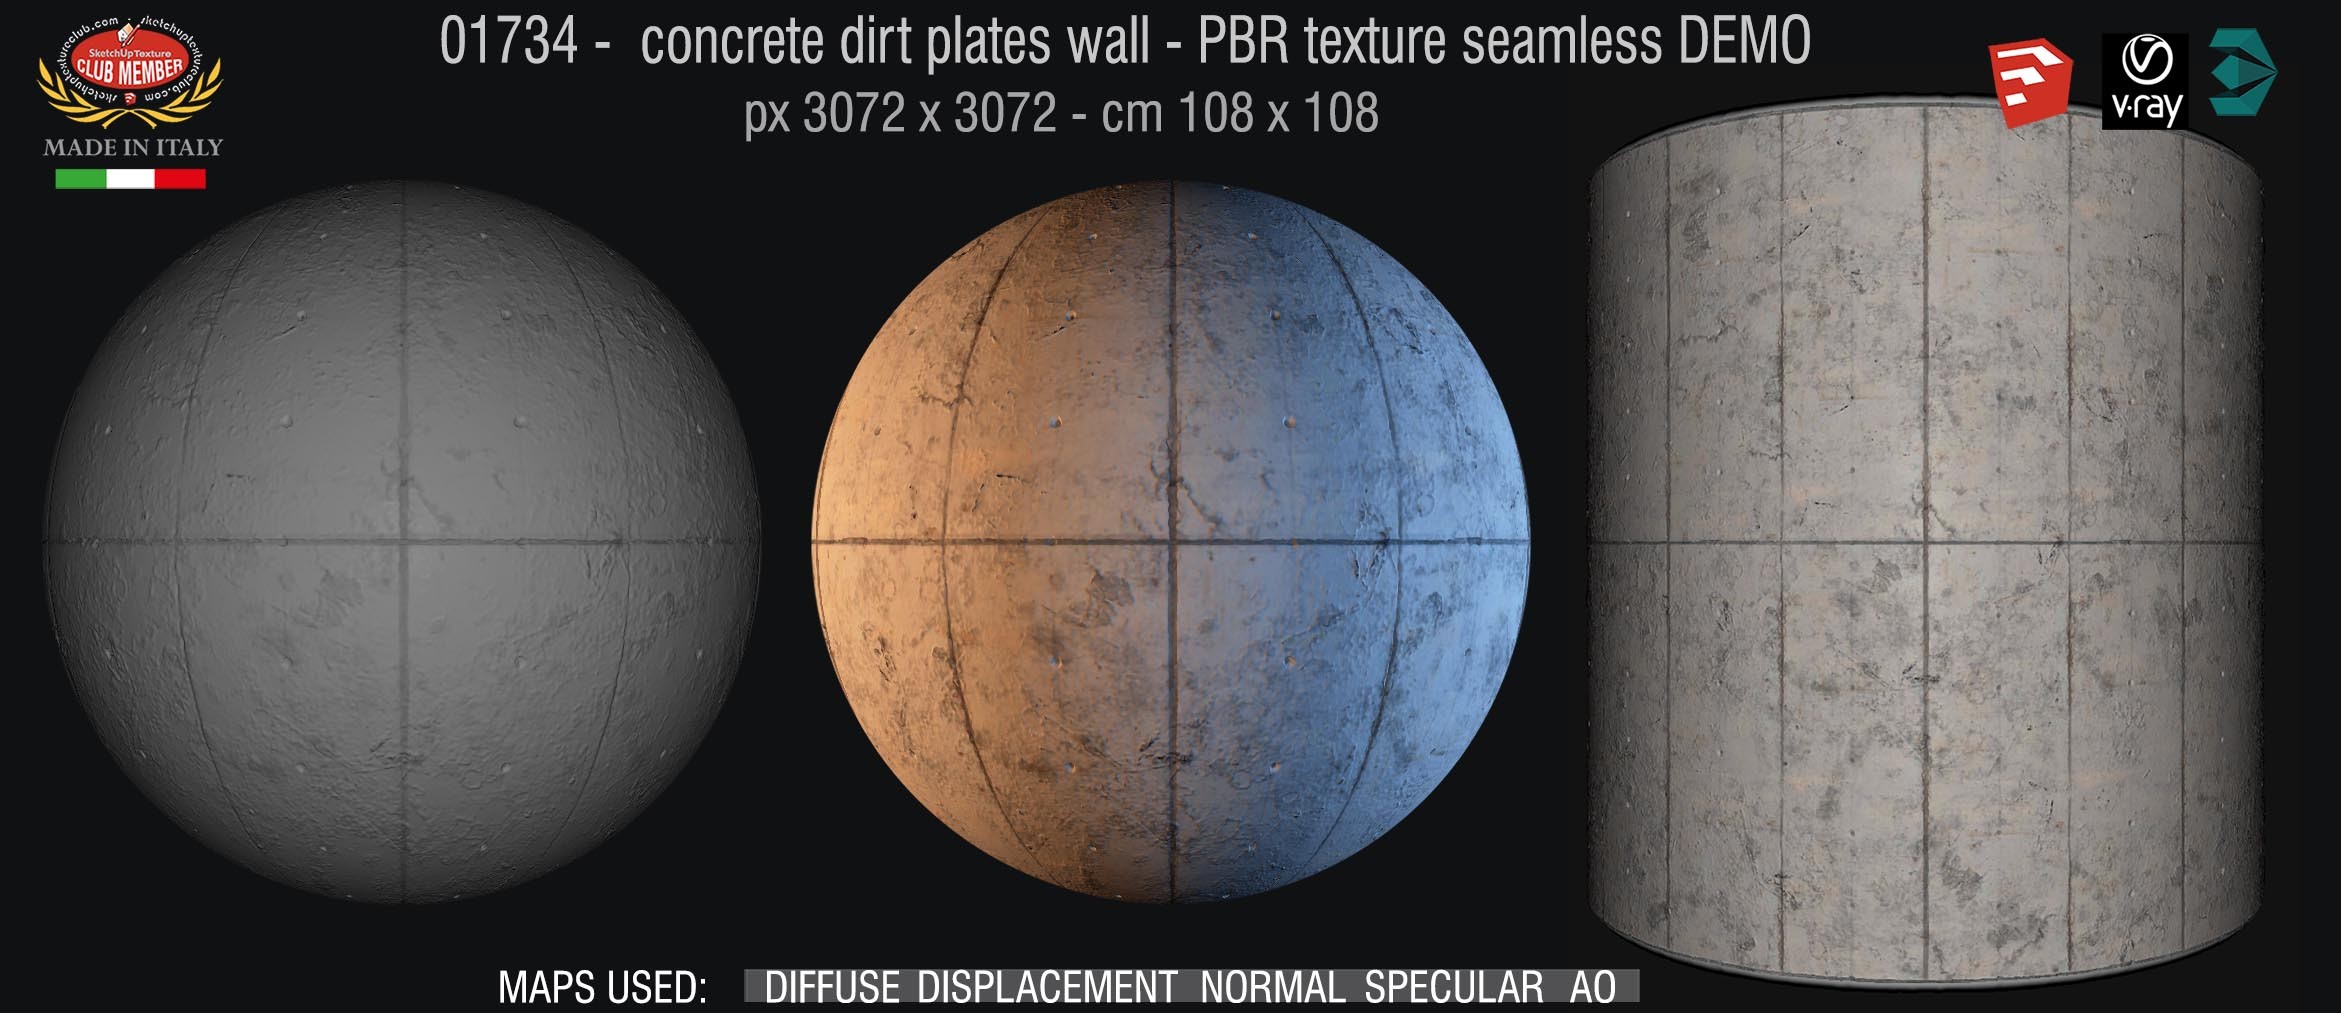 01734 concrete dirt plates wall PBR texture seamless DEMO